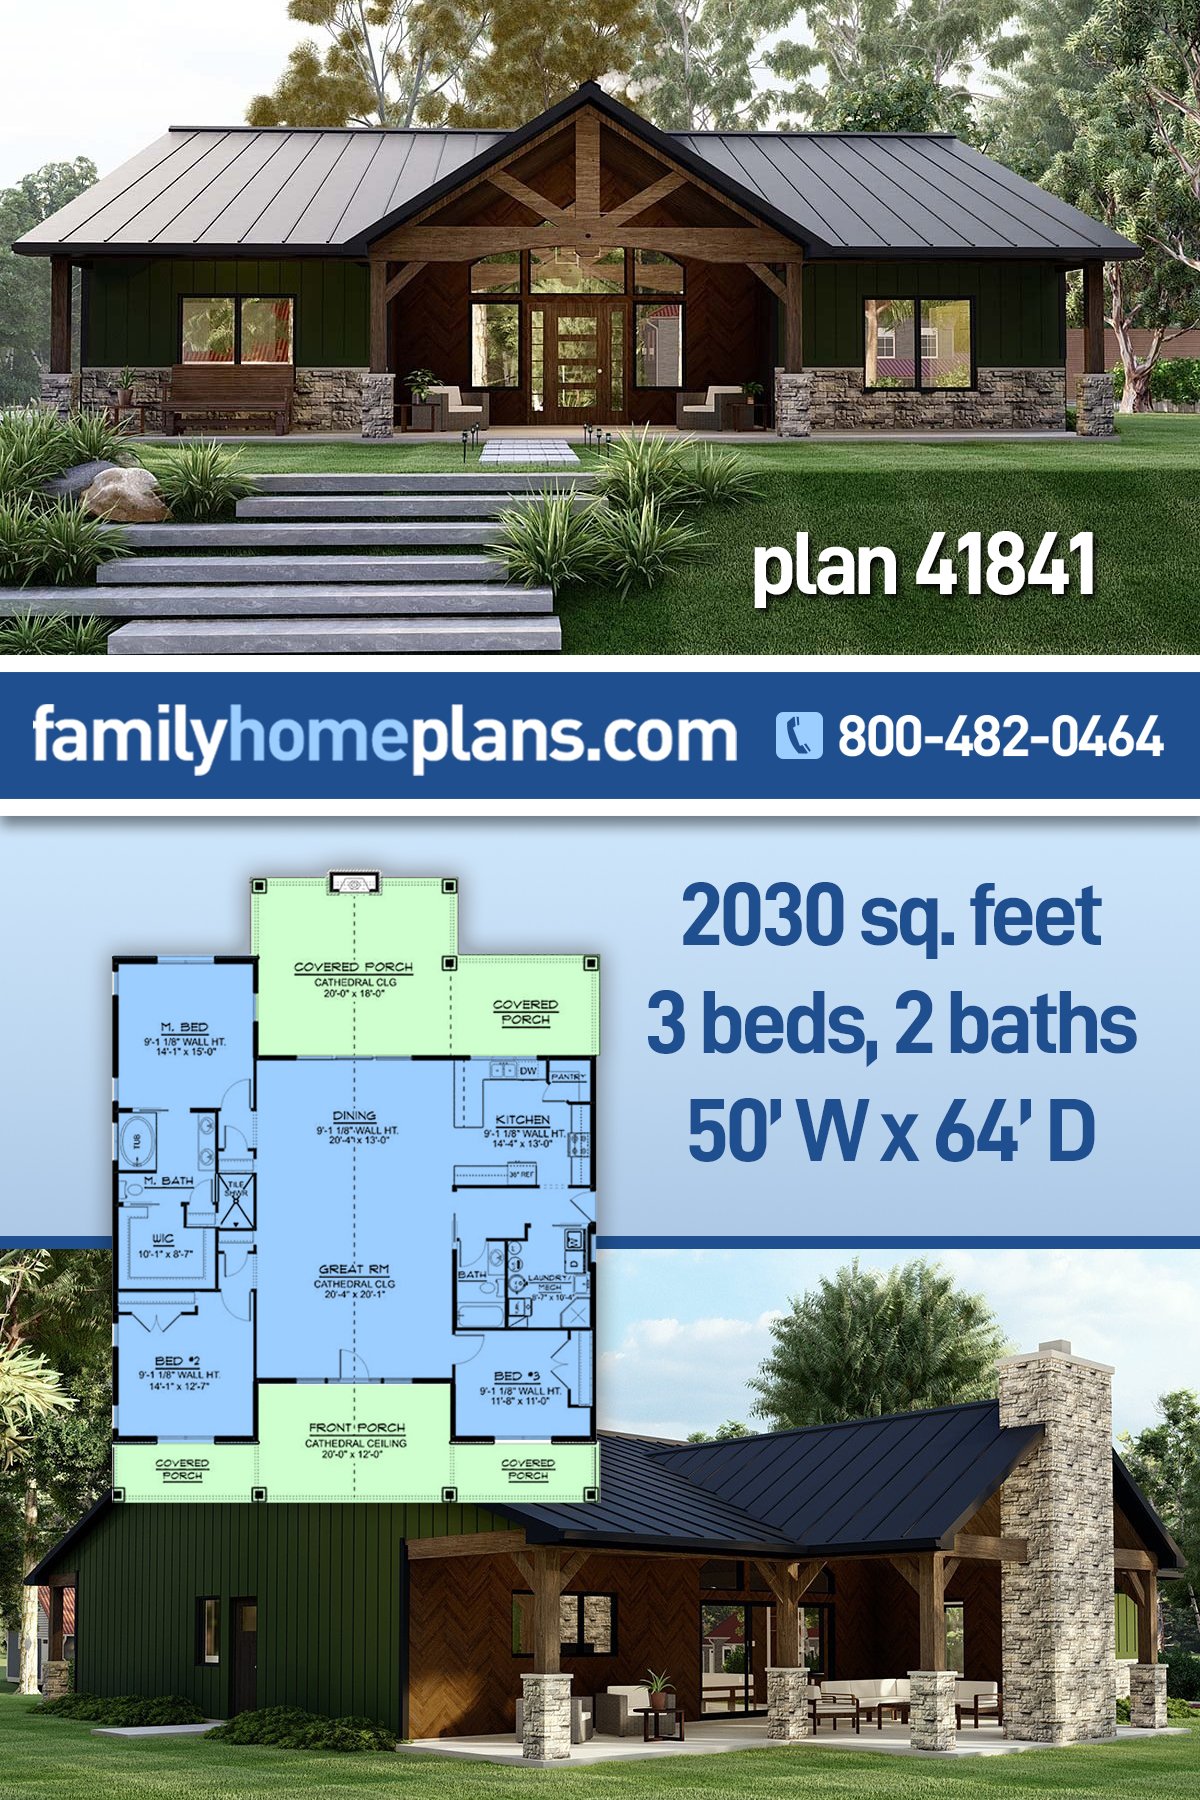 House Plan 41841